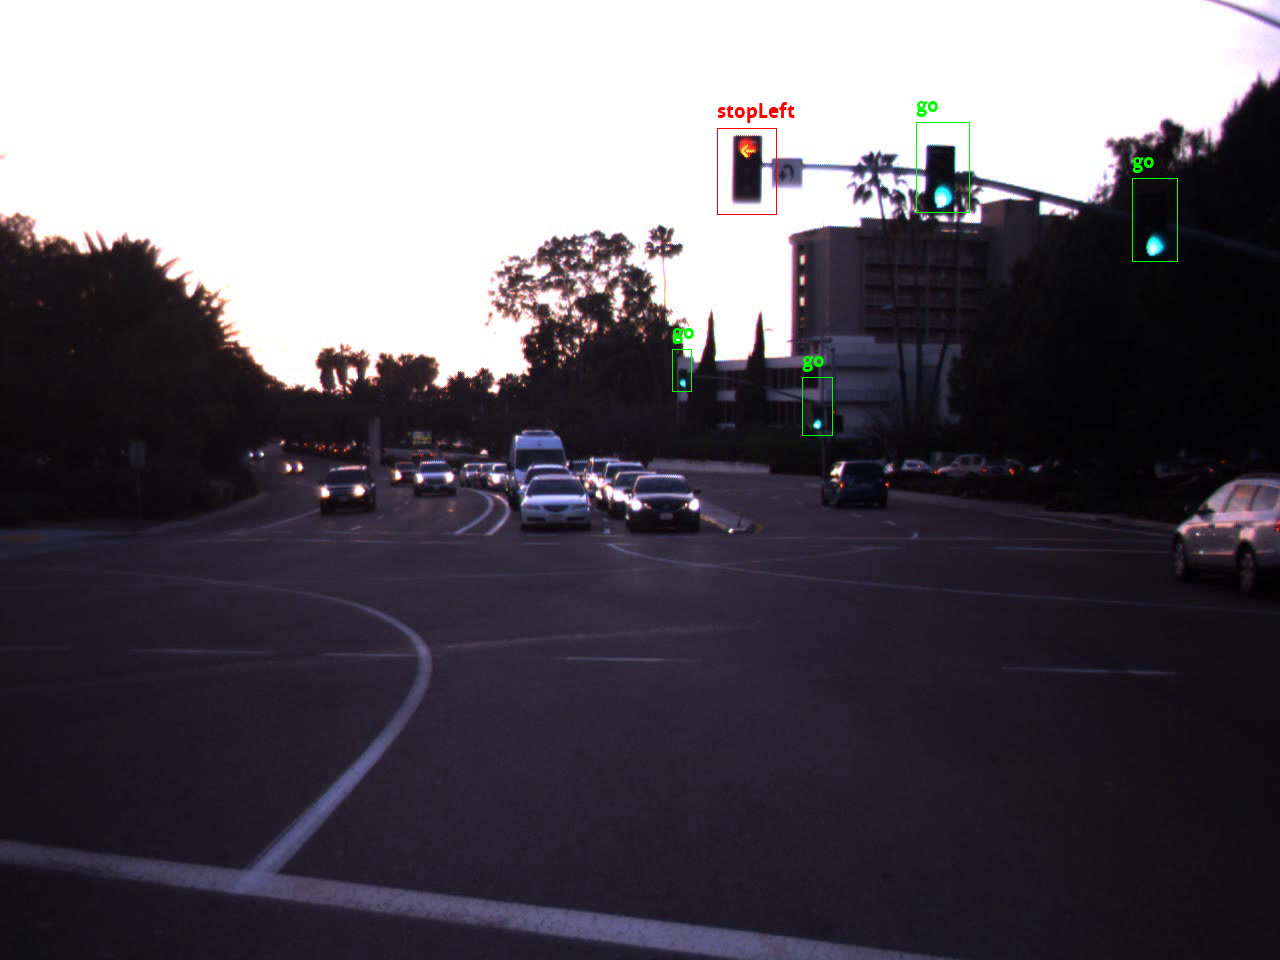 example_traffic_light_detection_image